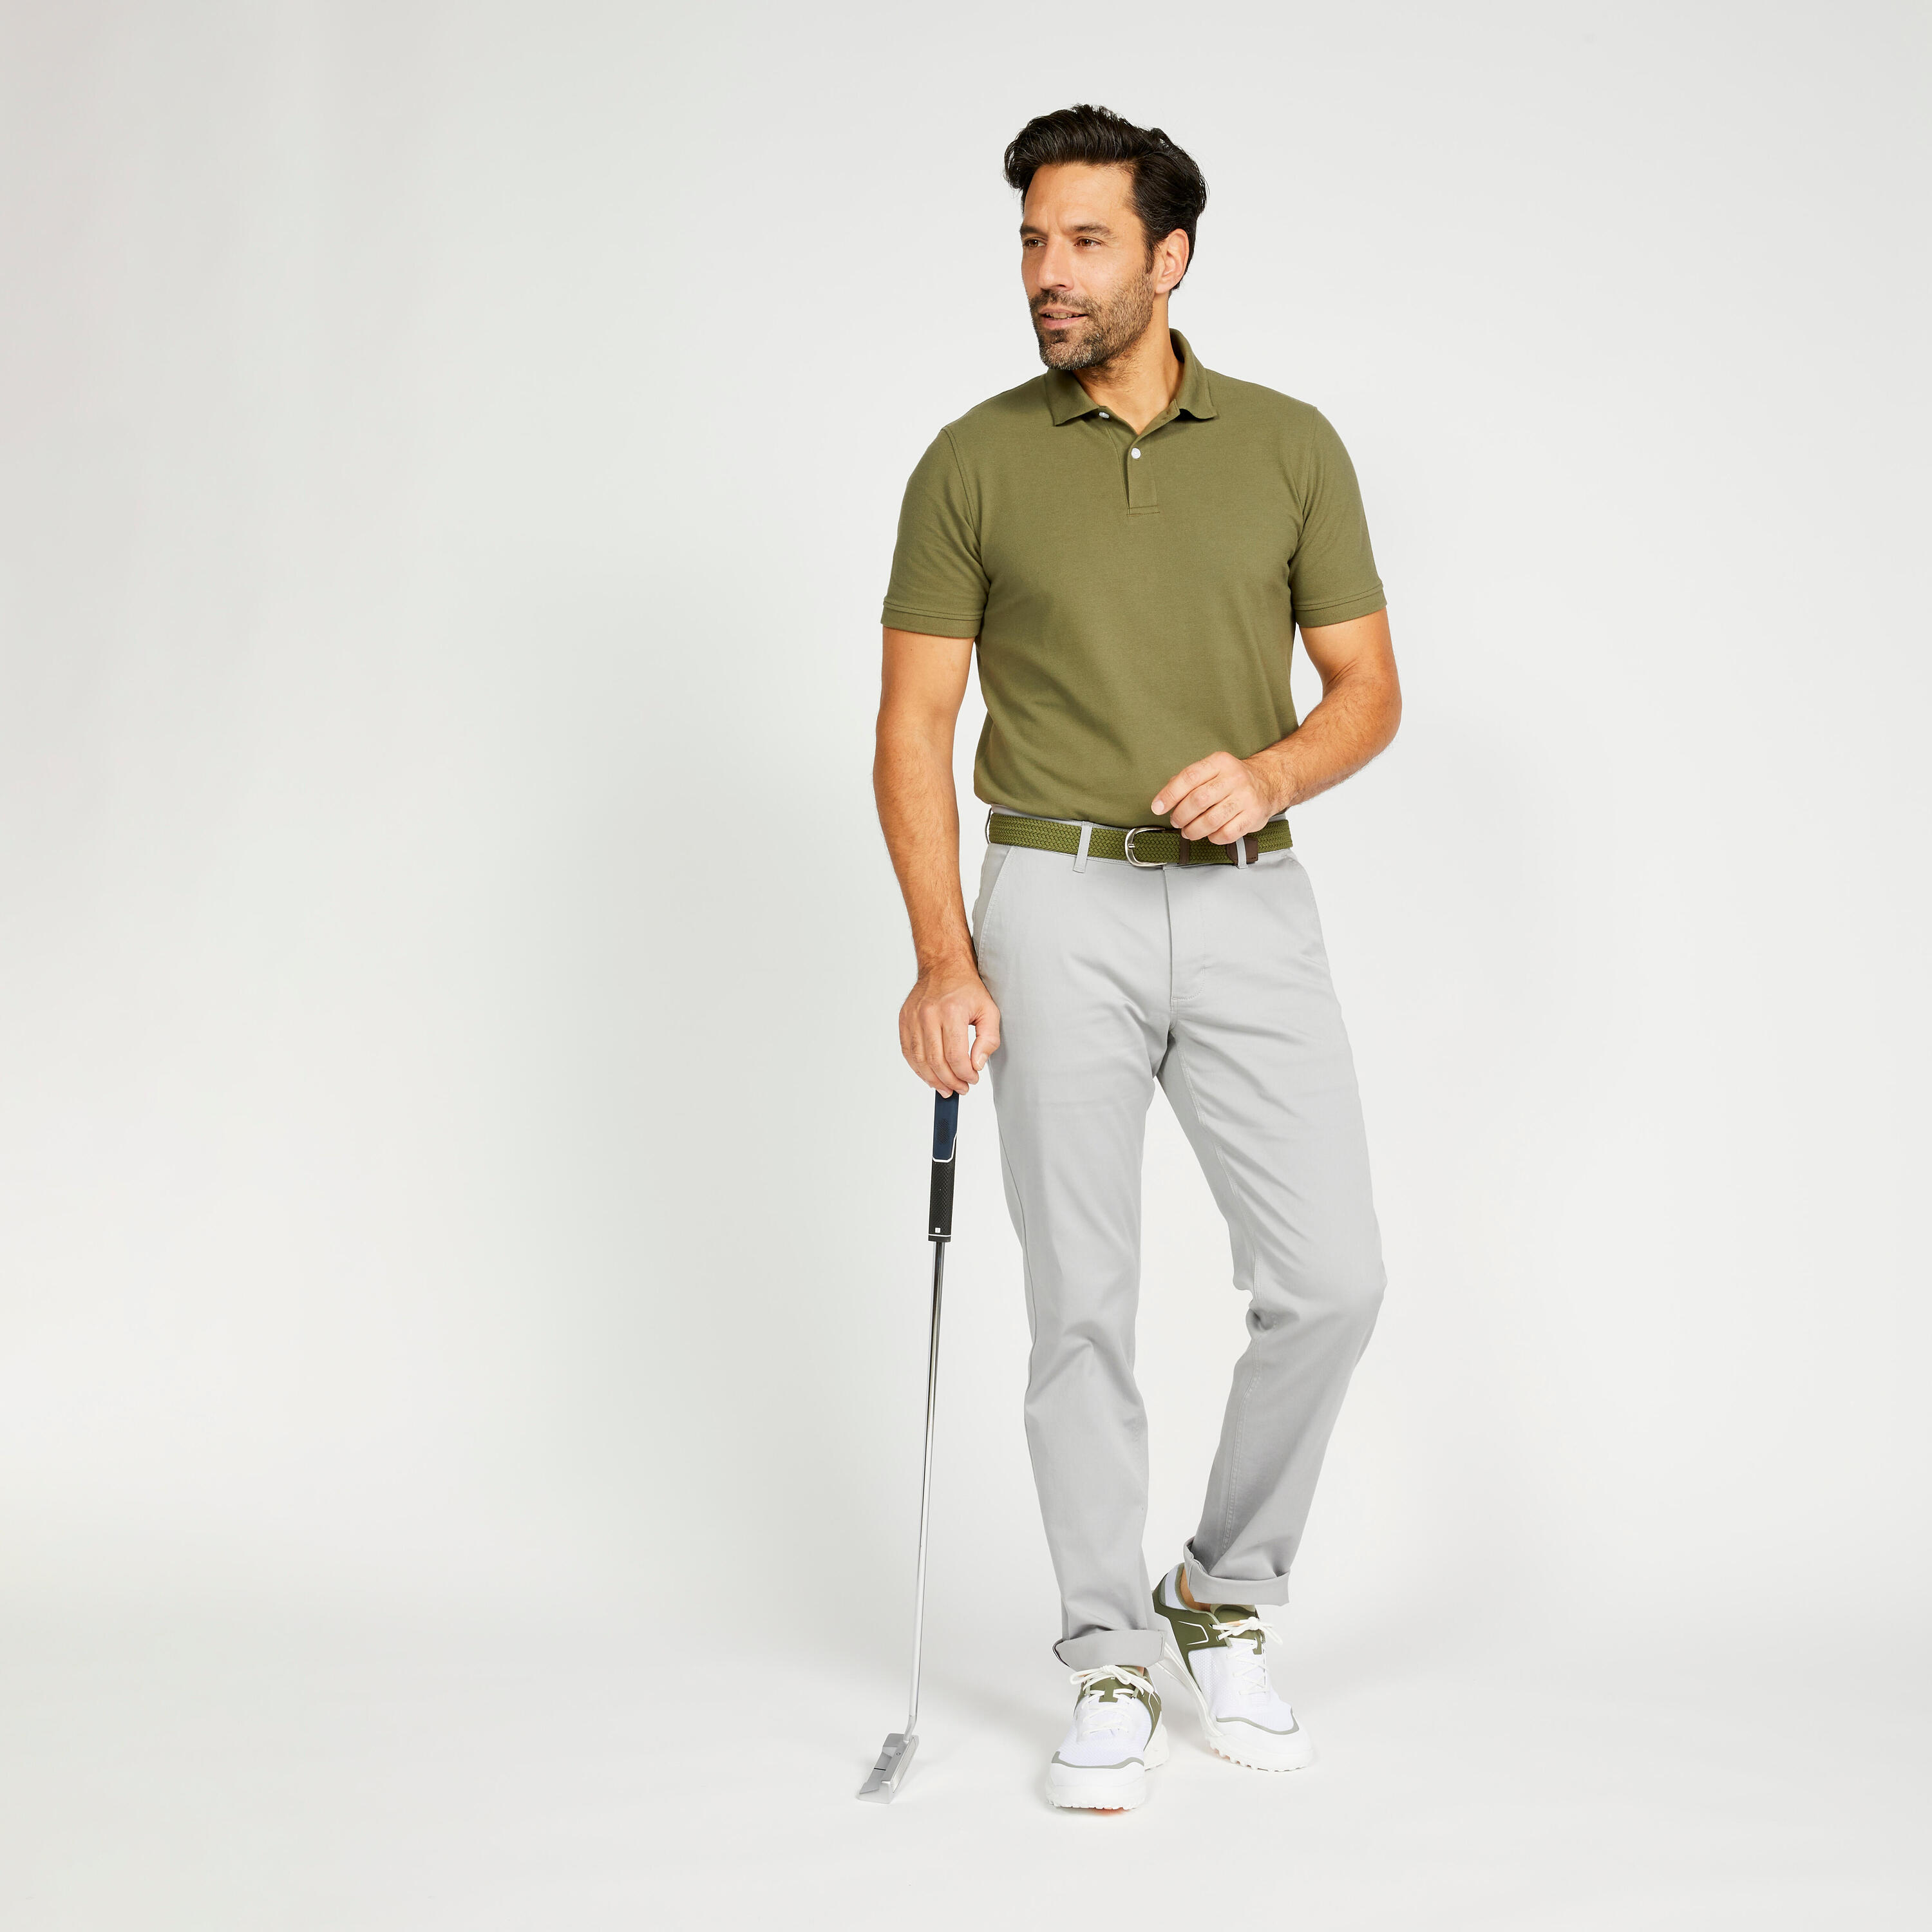 Men's short-sleeved golf polo shirt - MW500 khaki 2/5